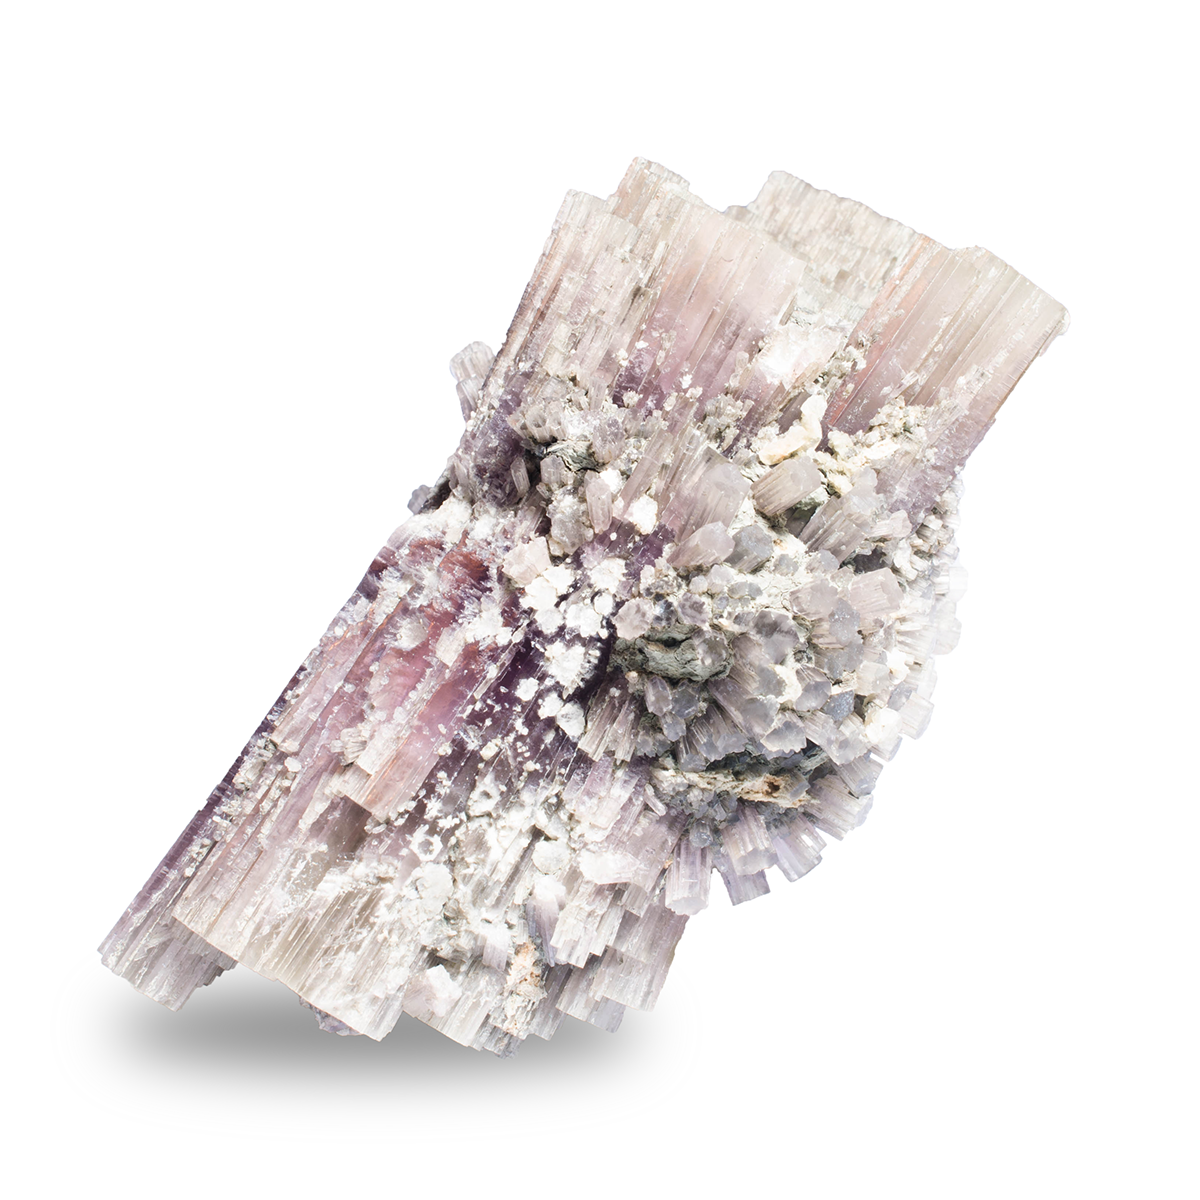 minerals jacinto fluorita quarz Fluorite aragonito Malaquita  pirita